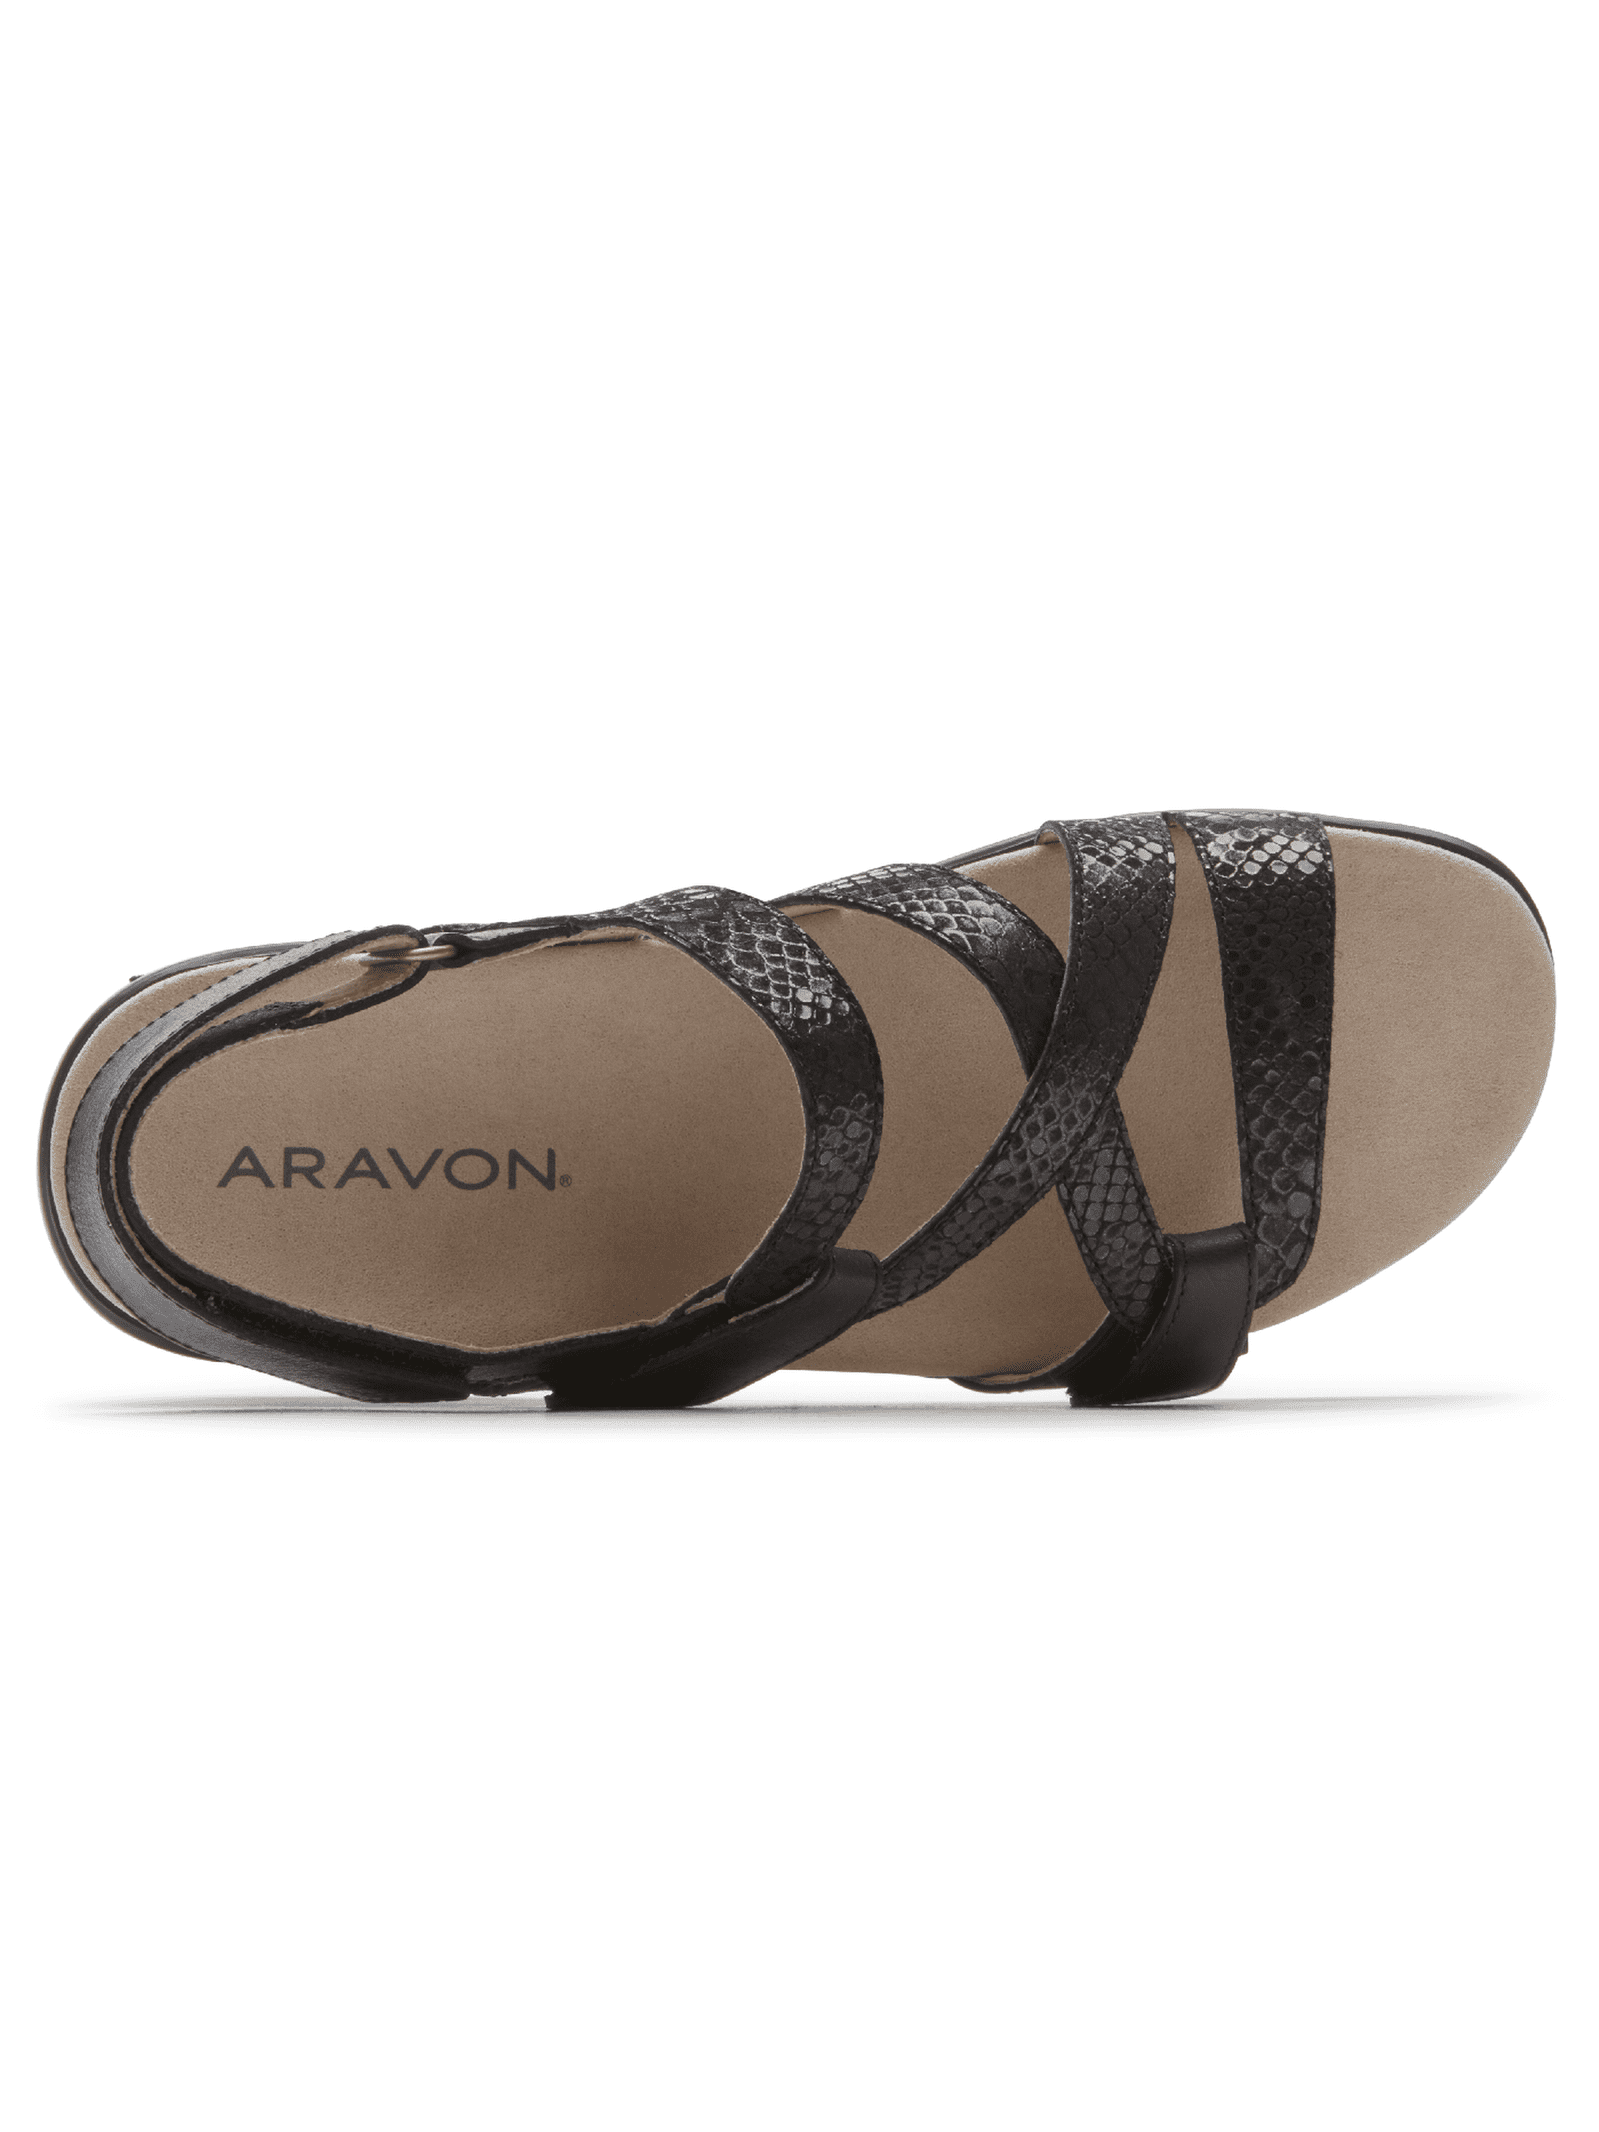 Rockport Aravon Women's Power Comfort S-Strap Sandal Black Multi CI0672.